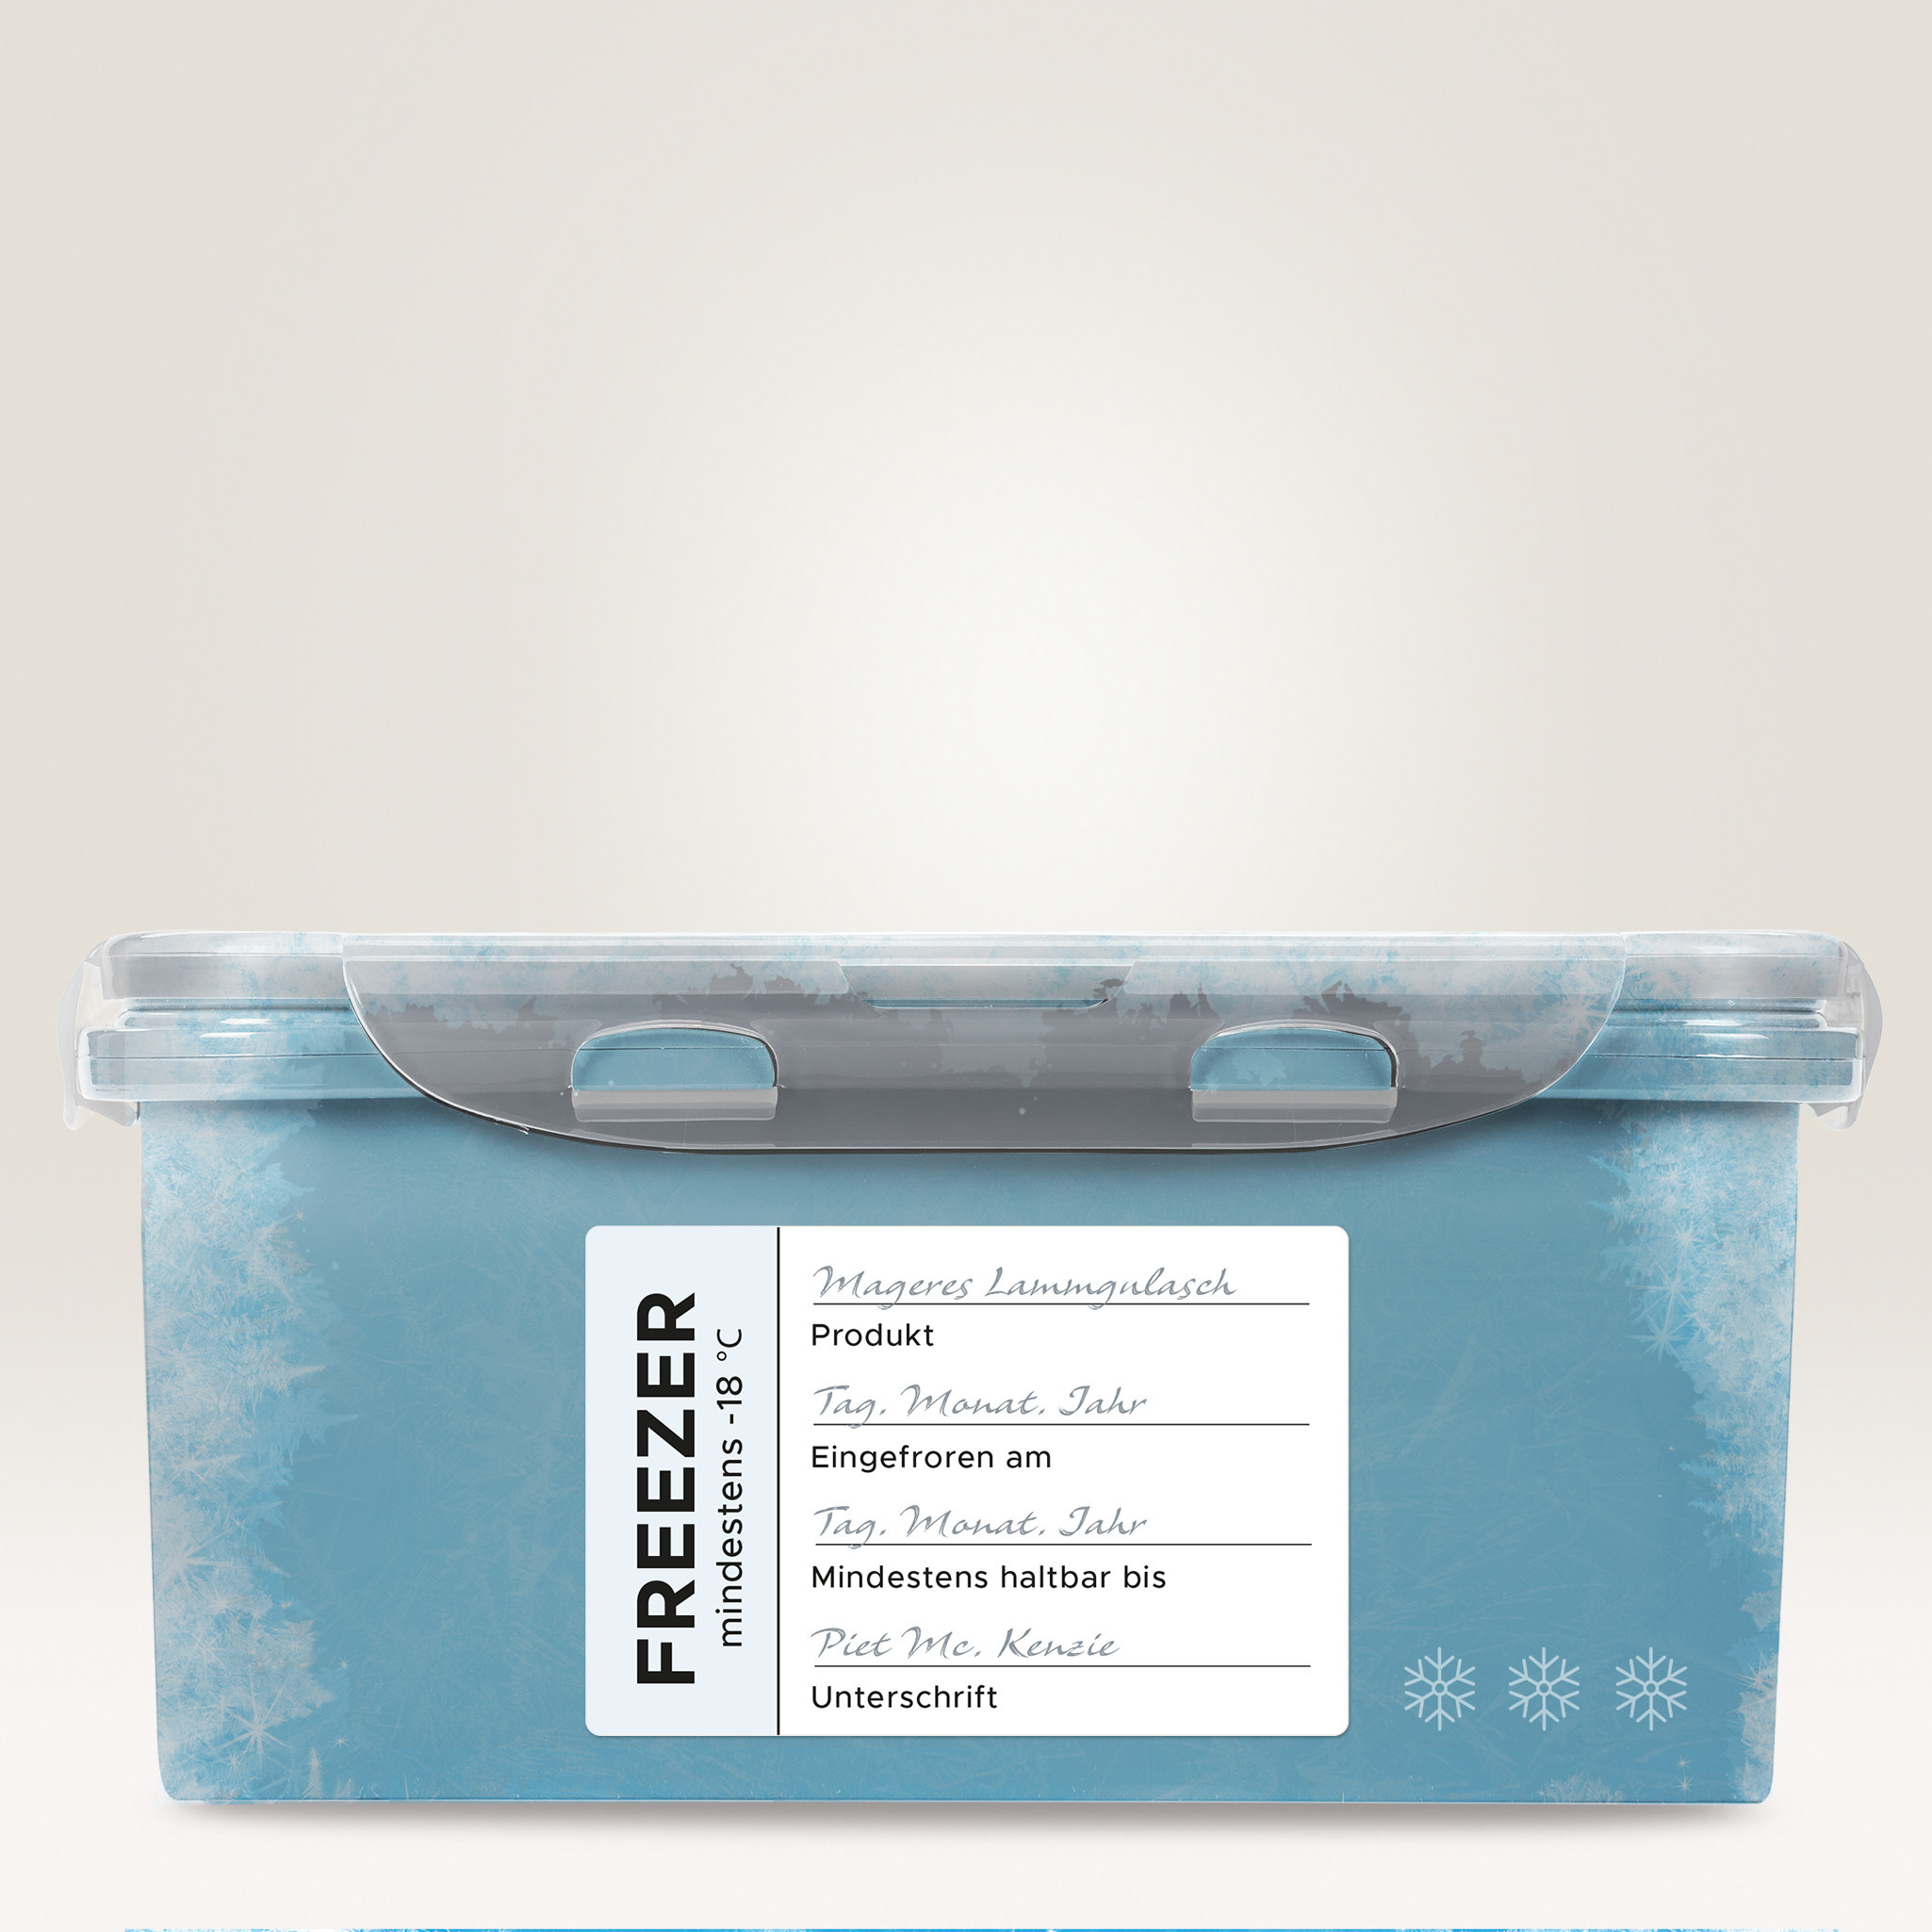 AVERY ZWECKFORM Etiquettes frigo 38,1x21,1mm L7971-25 1625 pcs.